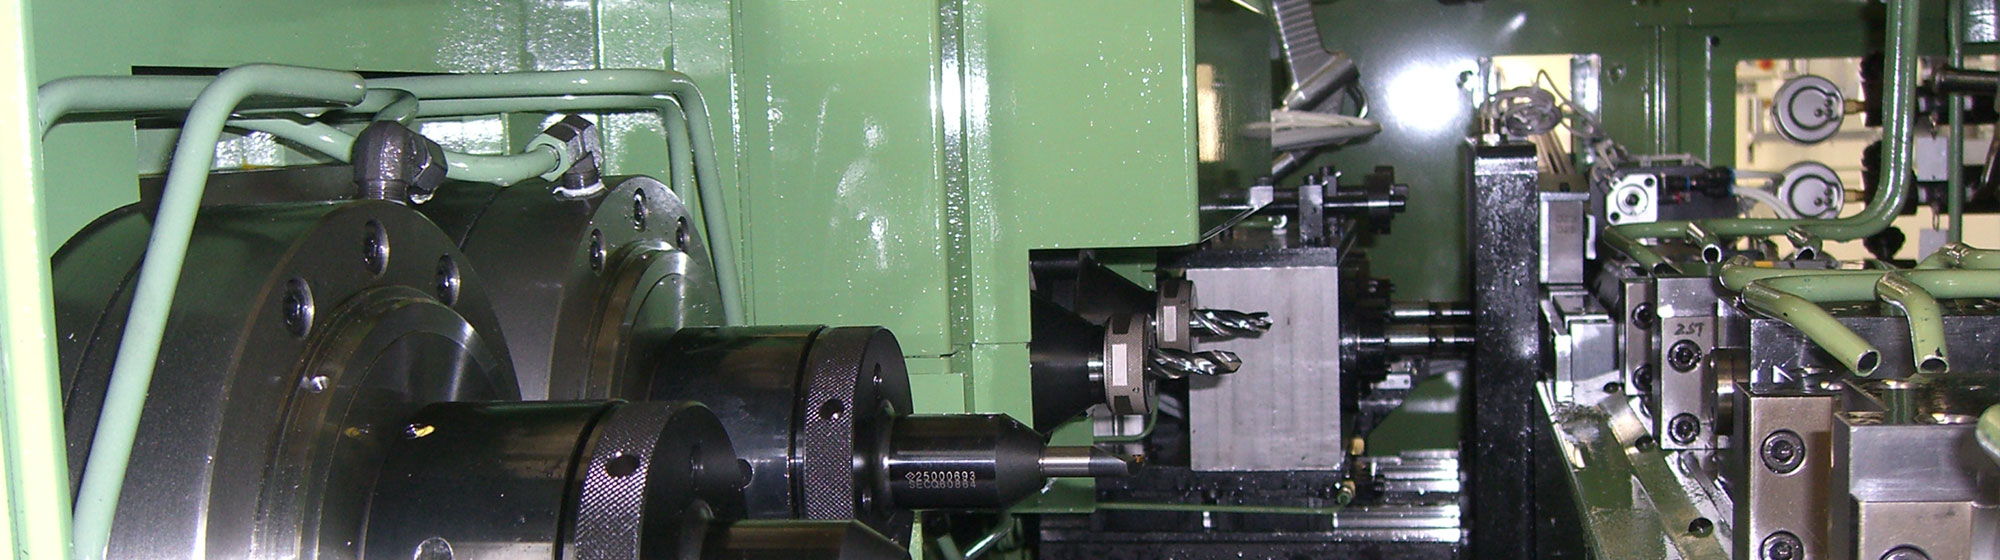 Dedicated machine tool of the SIGA MACHINE TOOL CO.,LTD.